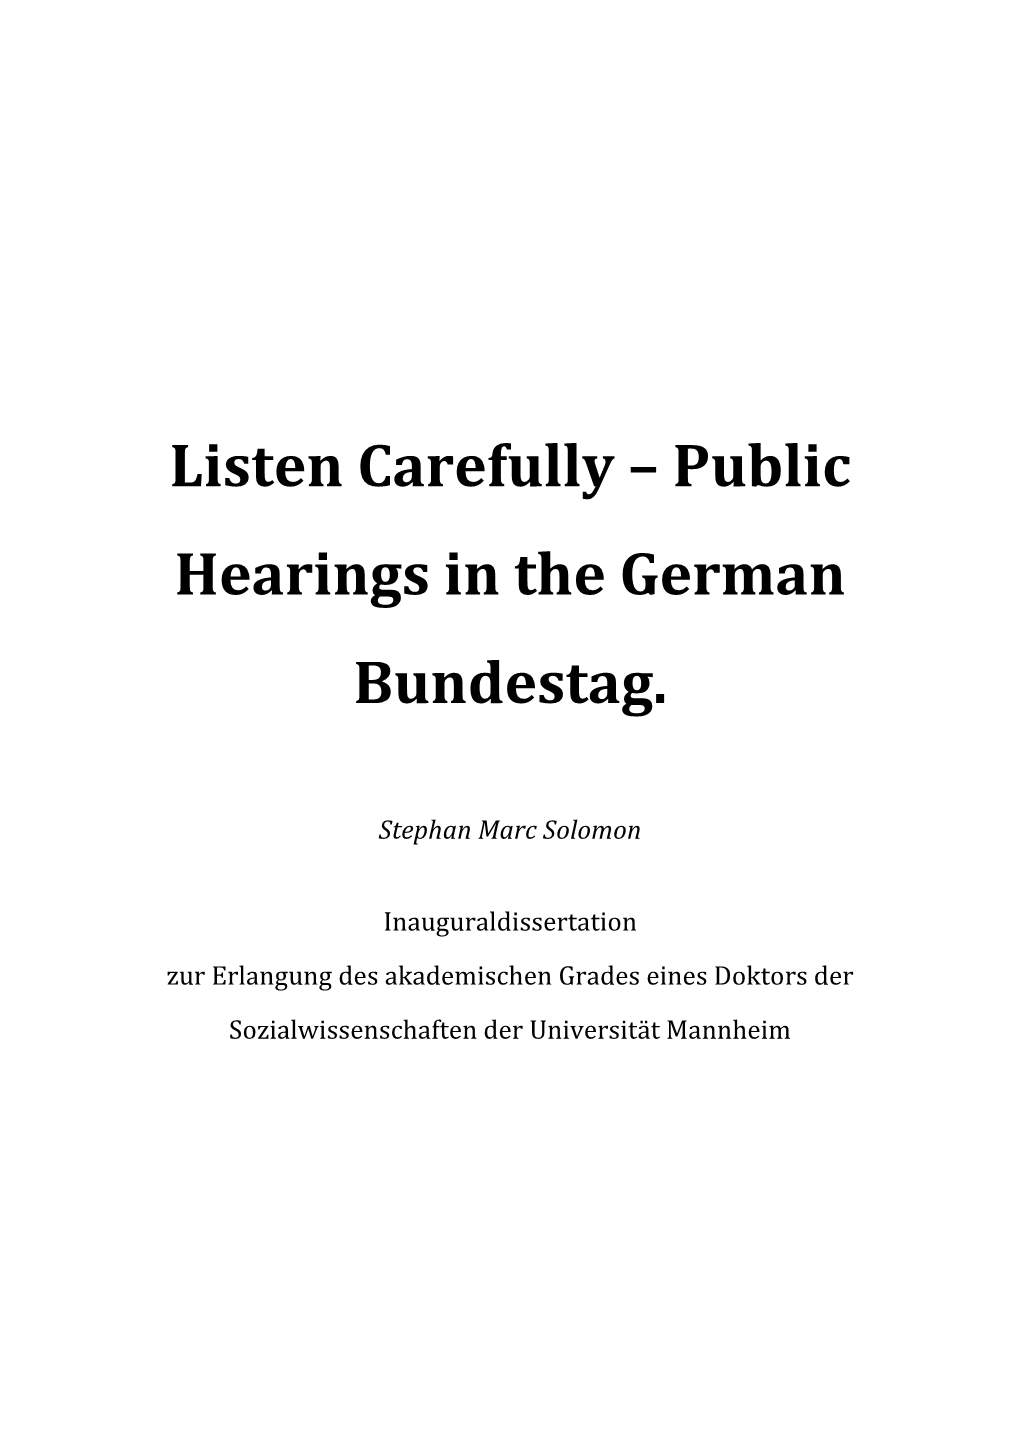 Listen Carefully – Public Hearings in the German Bundestag